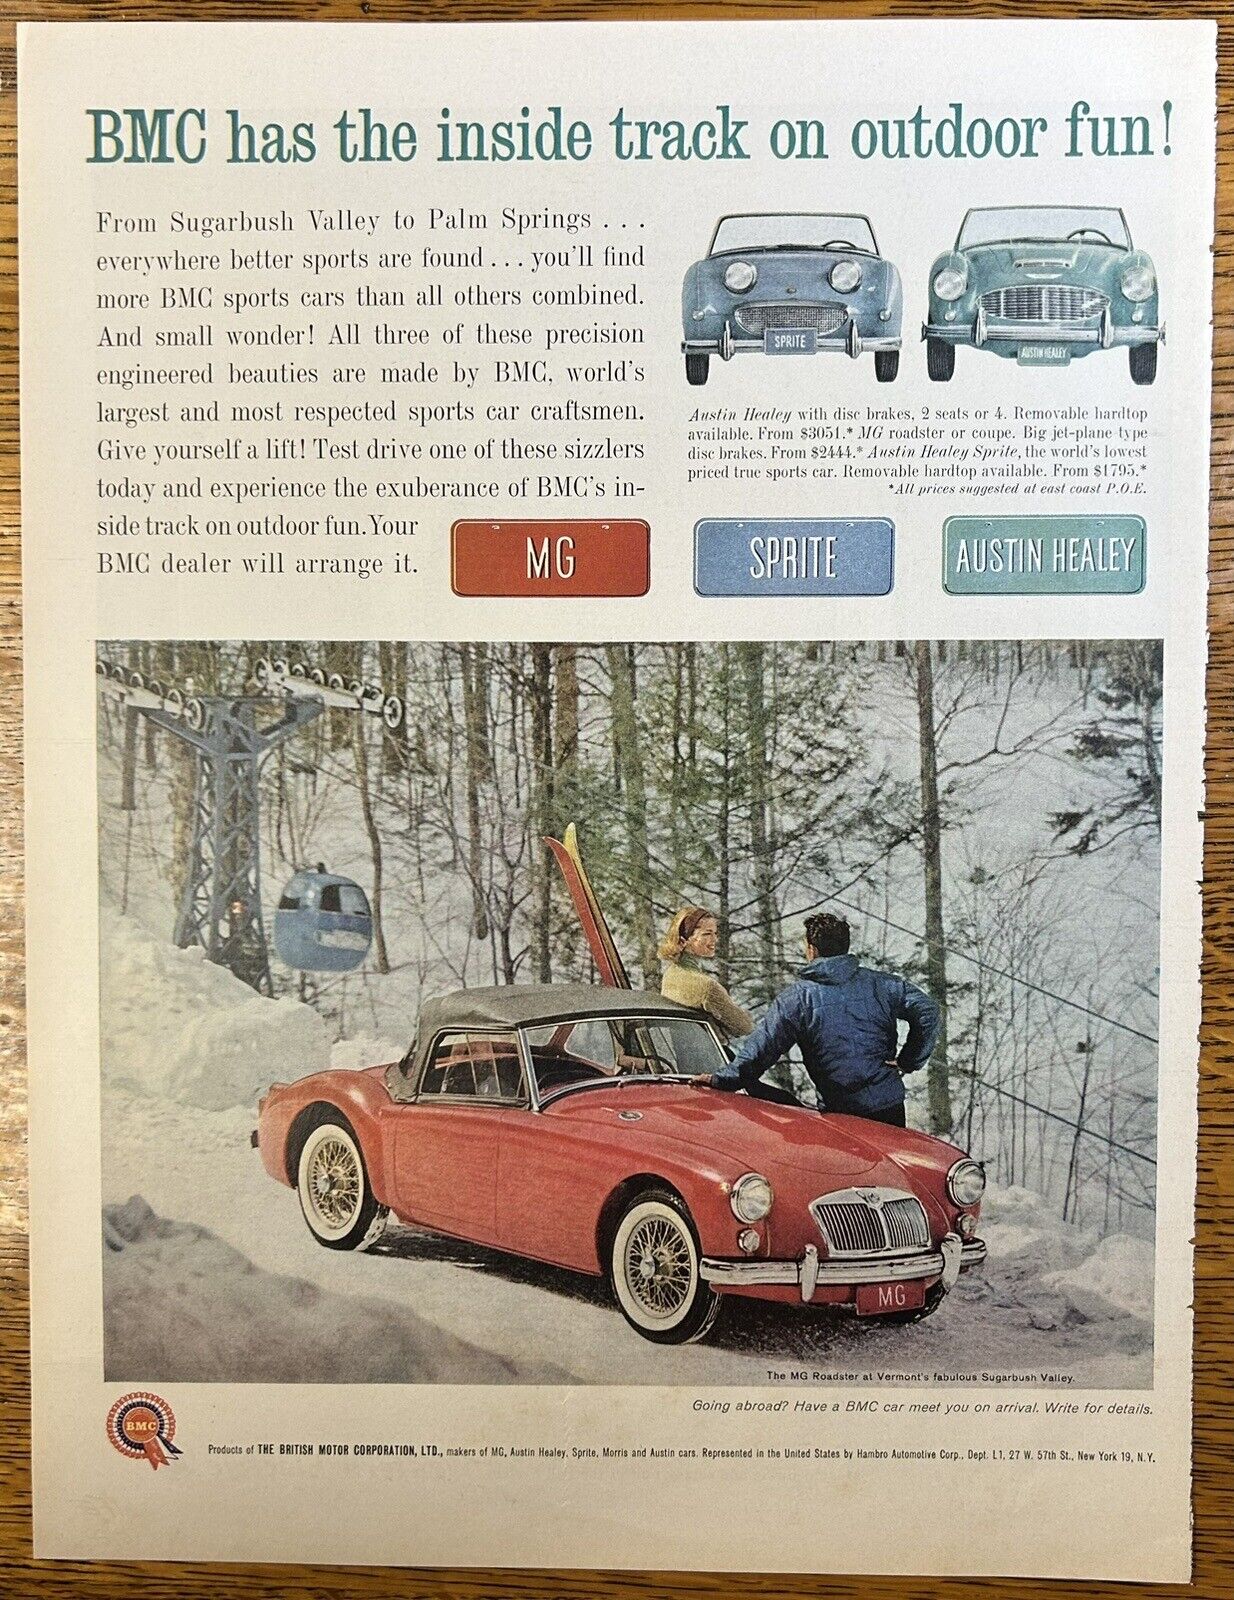 BMC Has the Inside Track 1961 British Motor Company Ad, 10 1/2” x 13 3/4”, MG